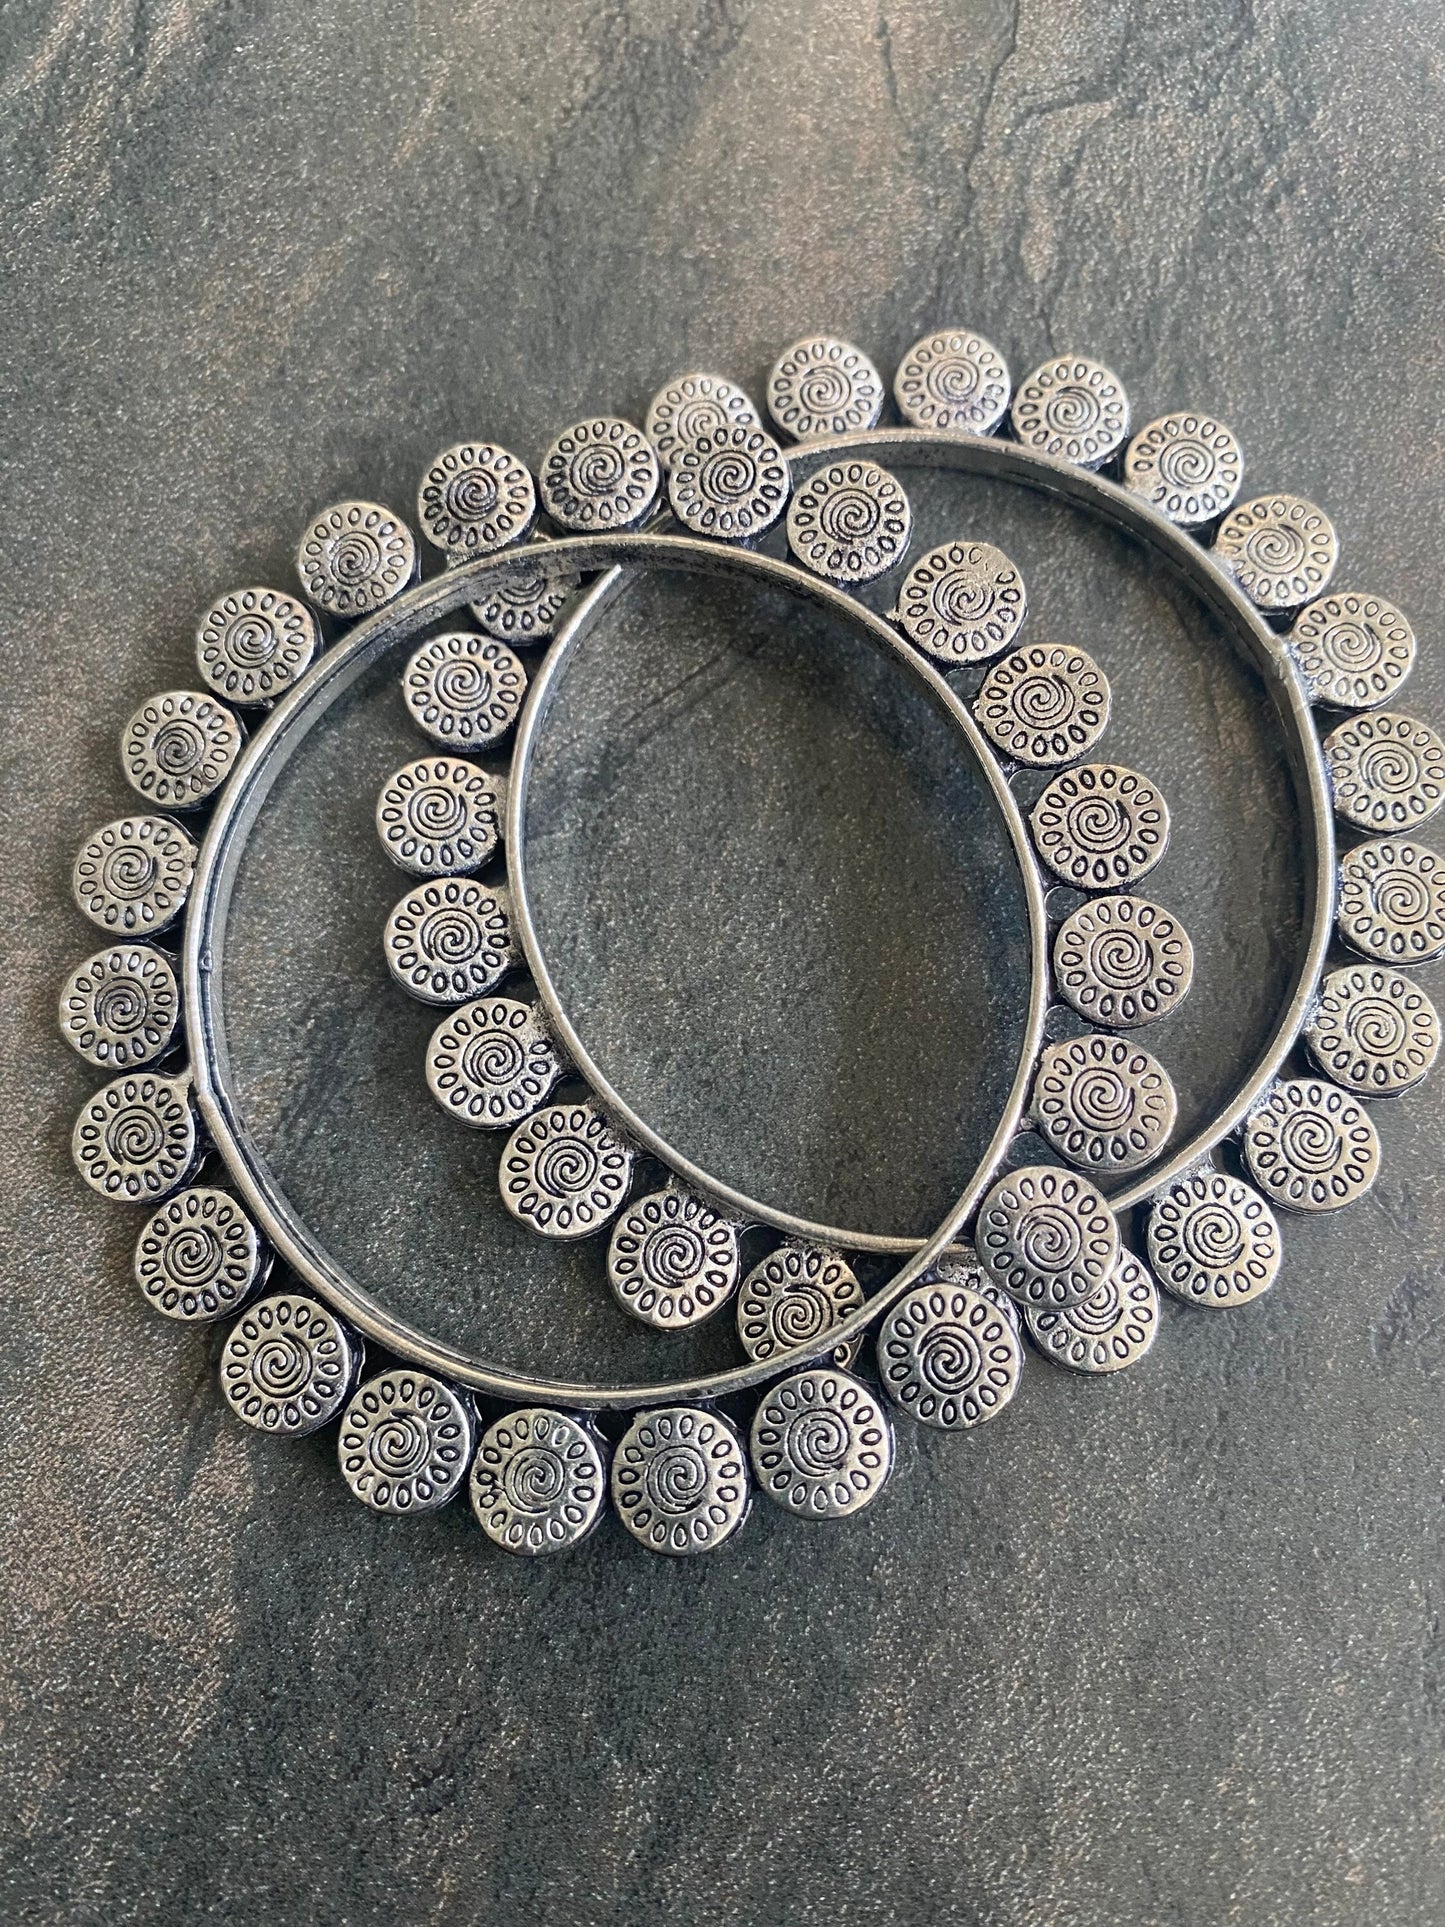 Oxidised Steel Bangle Bracelet For Women, Unique Bracelet, Kada Bangle, Gifts For Her, Indian Jewelry